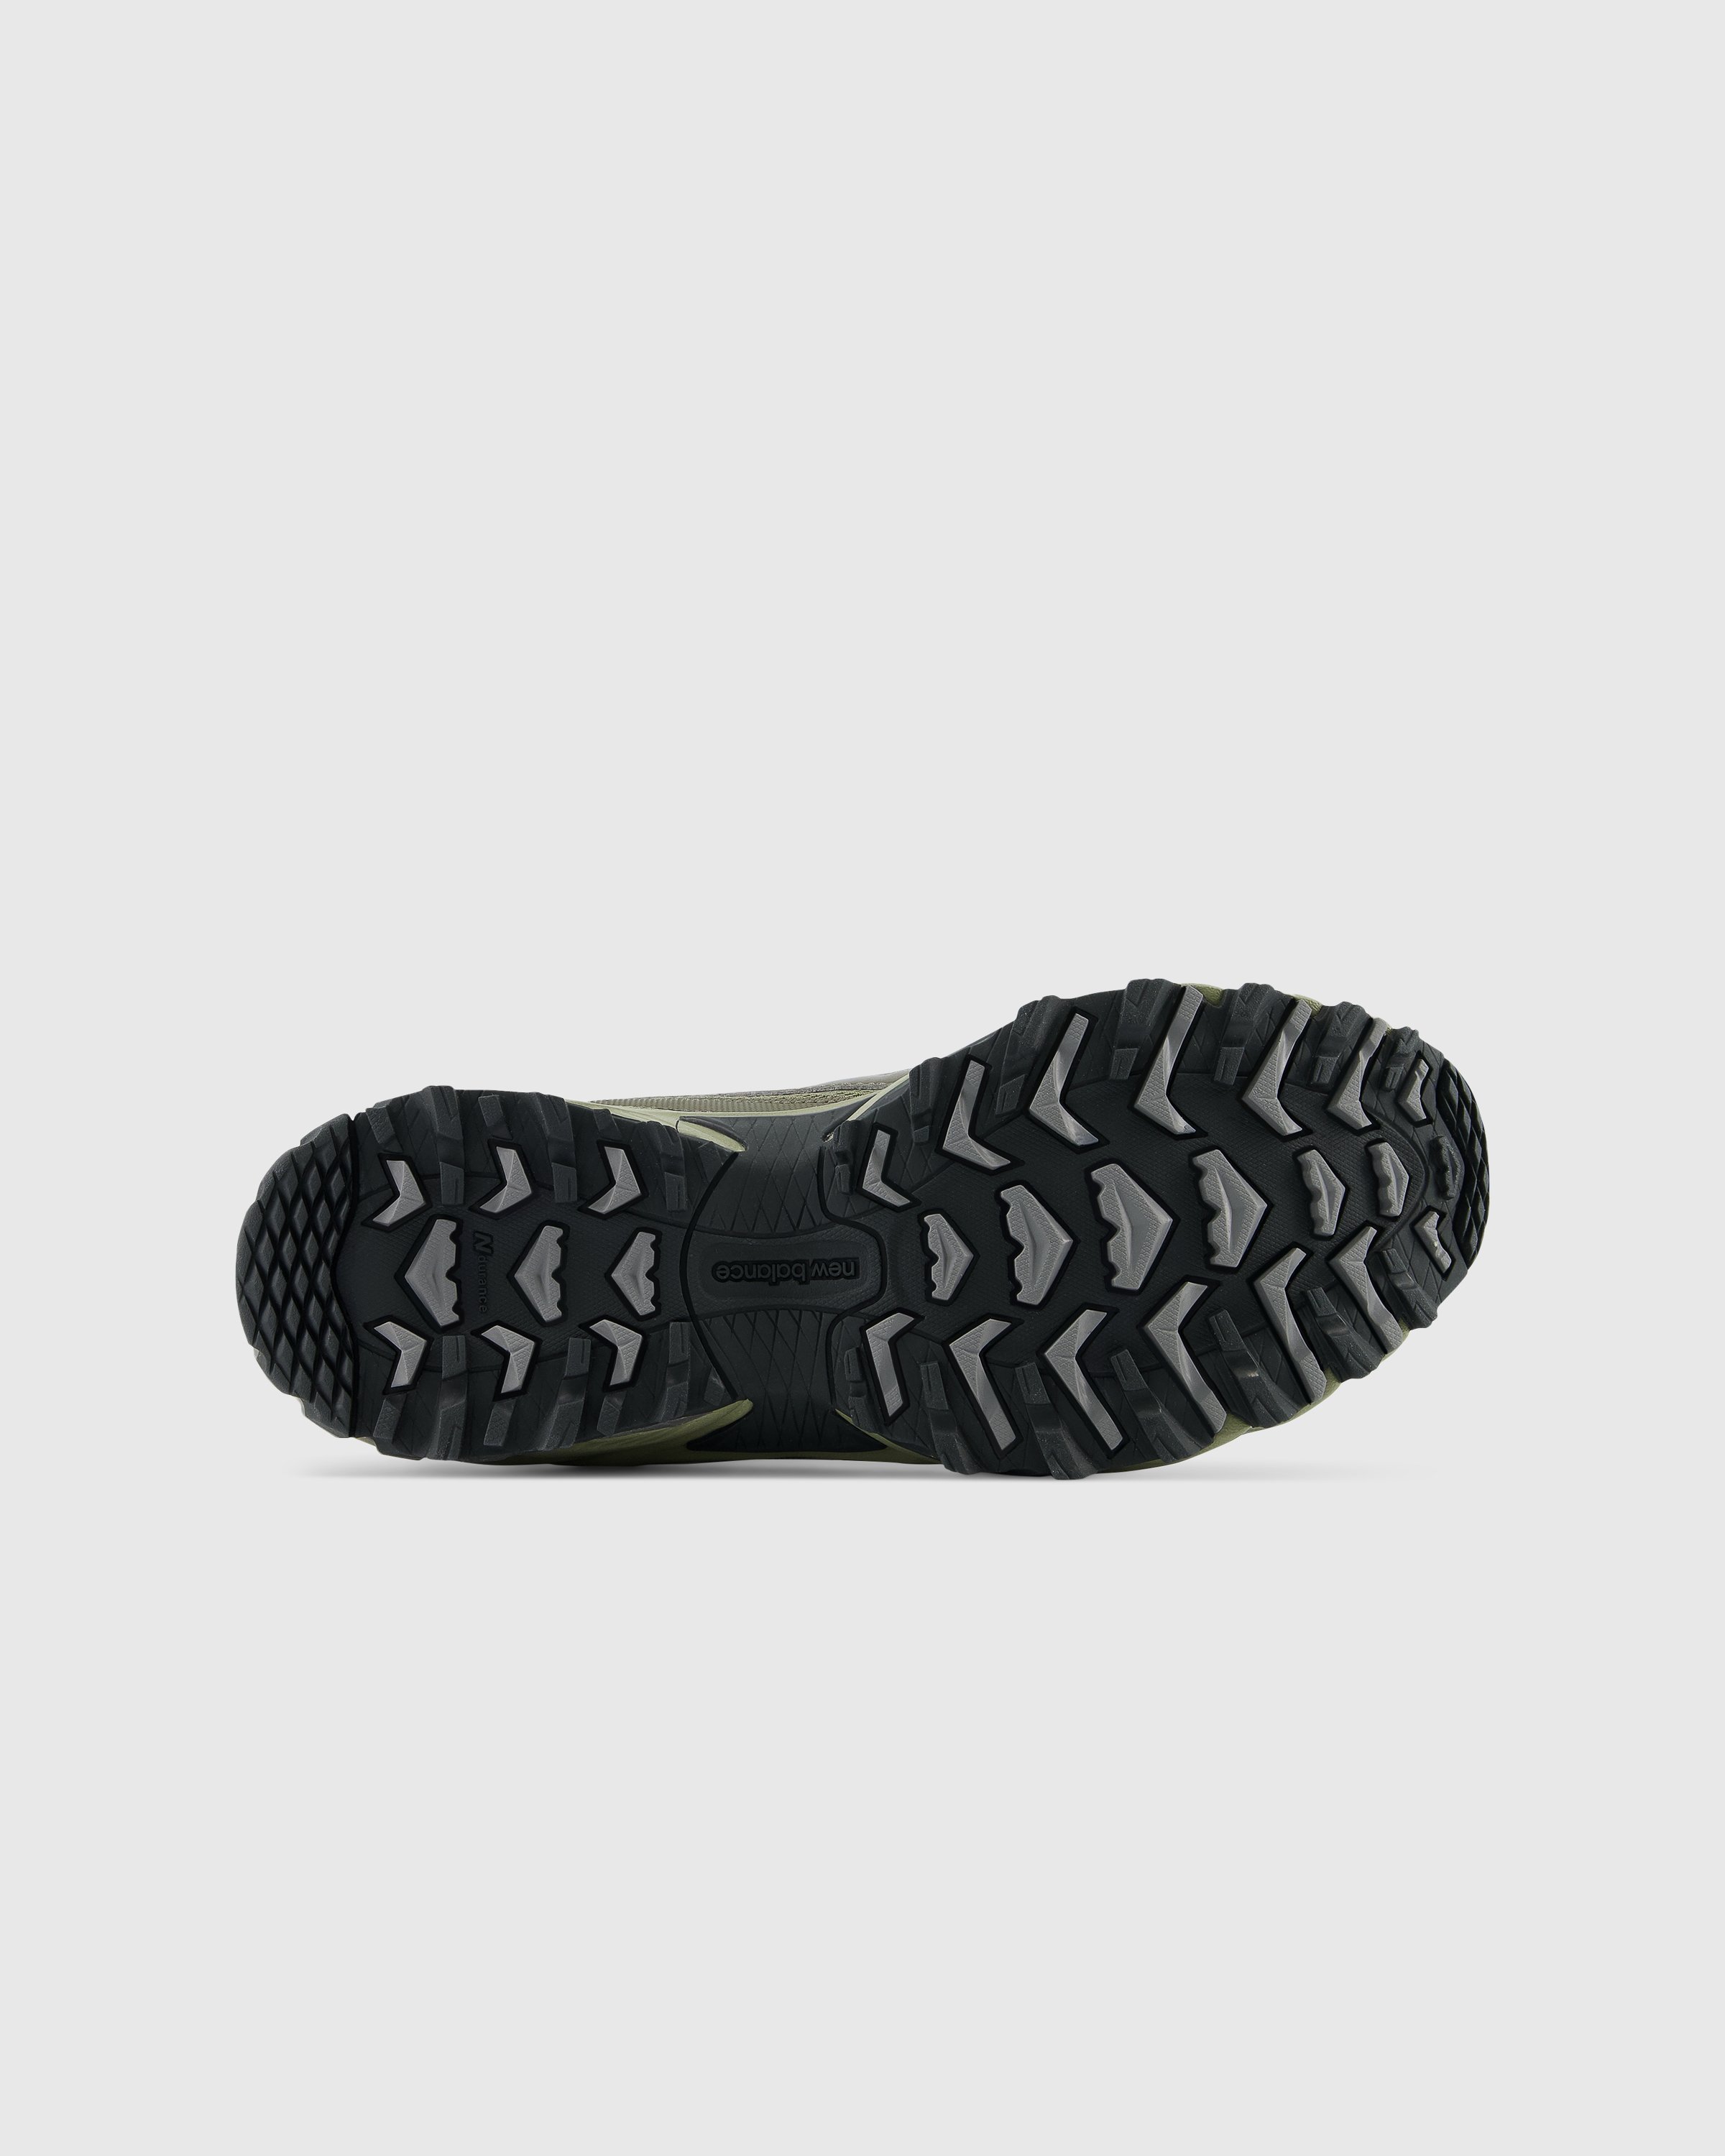 New Balance - ML 610 TAH Dark Camo - Footwear - Green - Image 6